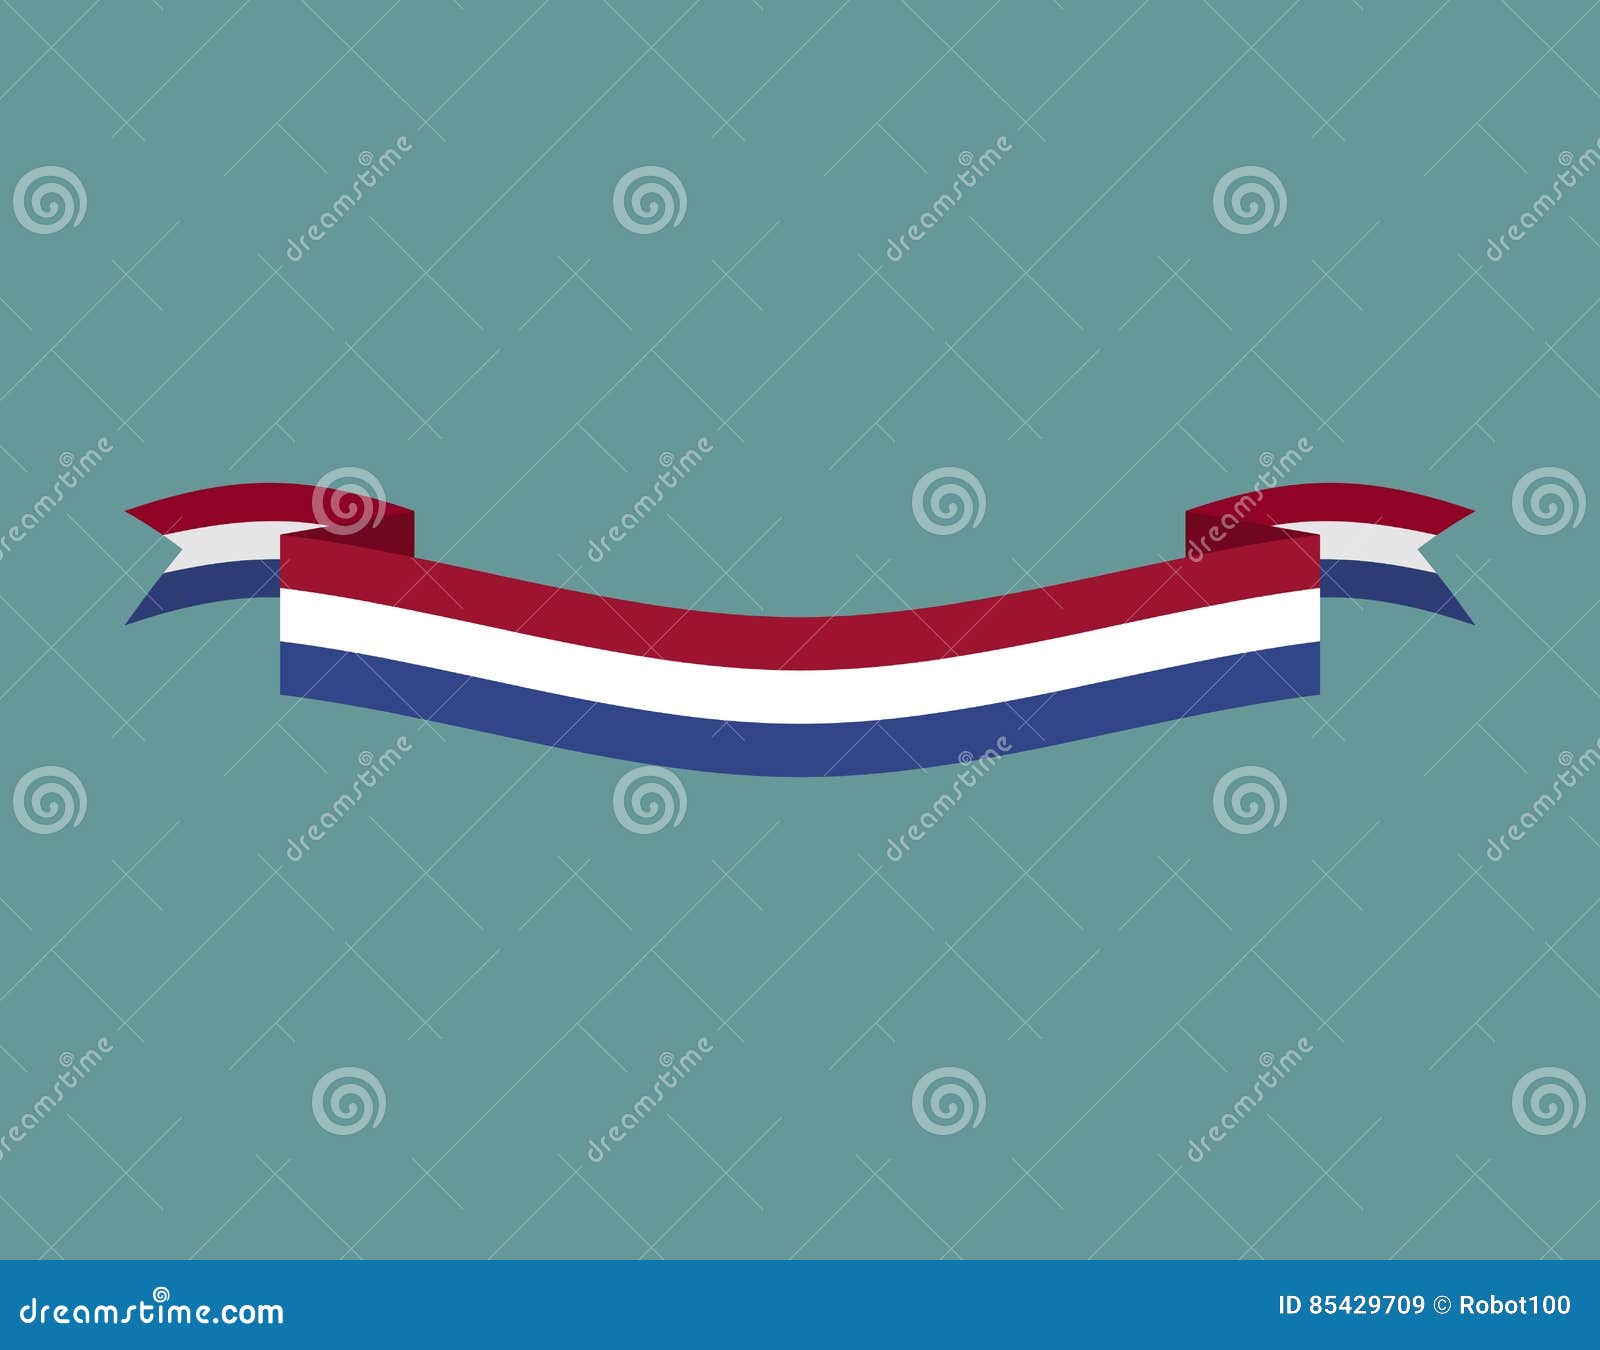 Premium Vector  Waving ribbon or banner with flag of senegal